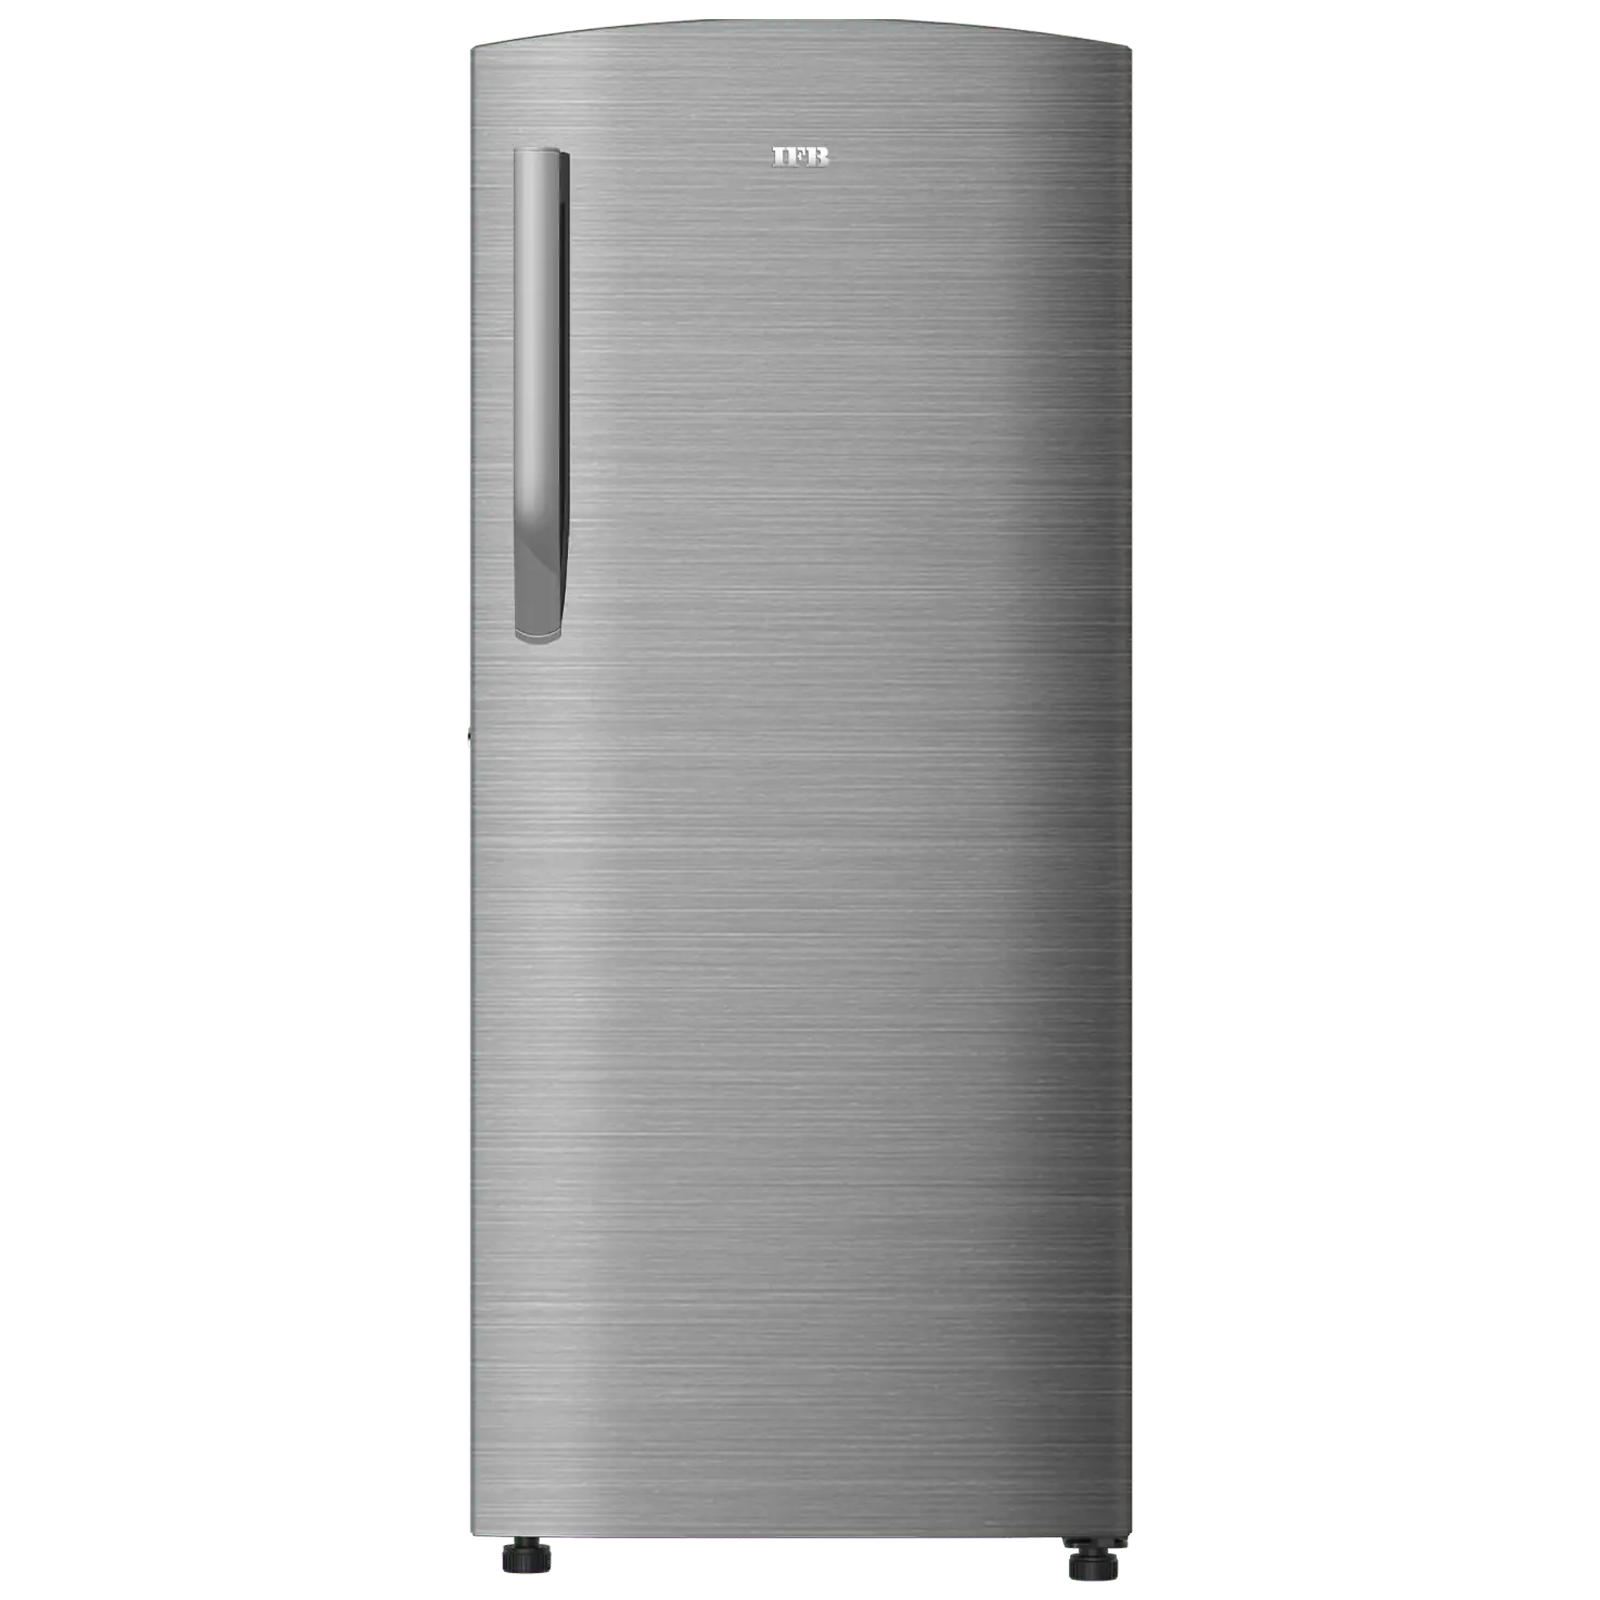 IFB Metal Cool 203 Litres 3 Star Direct Cool Single Door Refrigerator with Antibacterial Gasket (IFBDC2233FBS, Grey Steel)